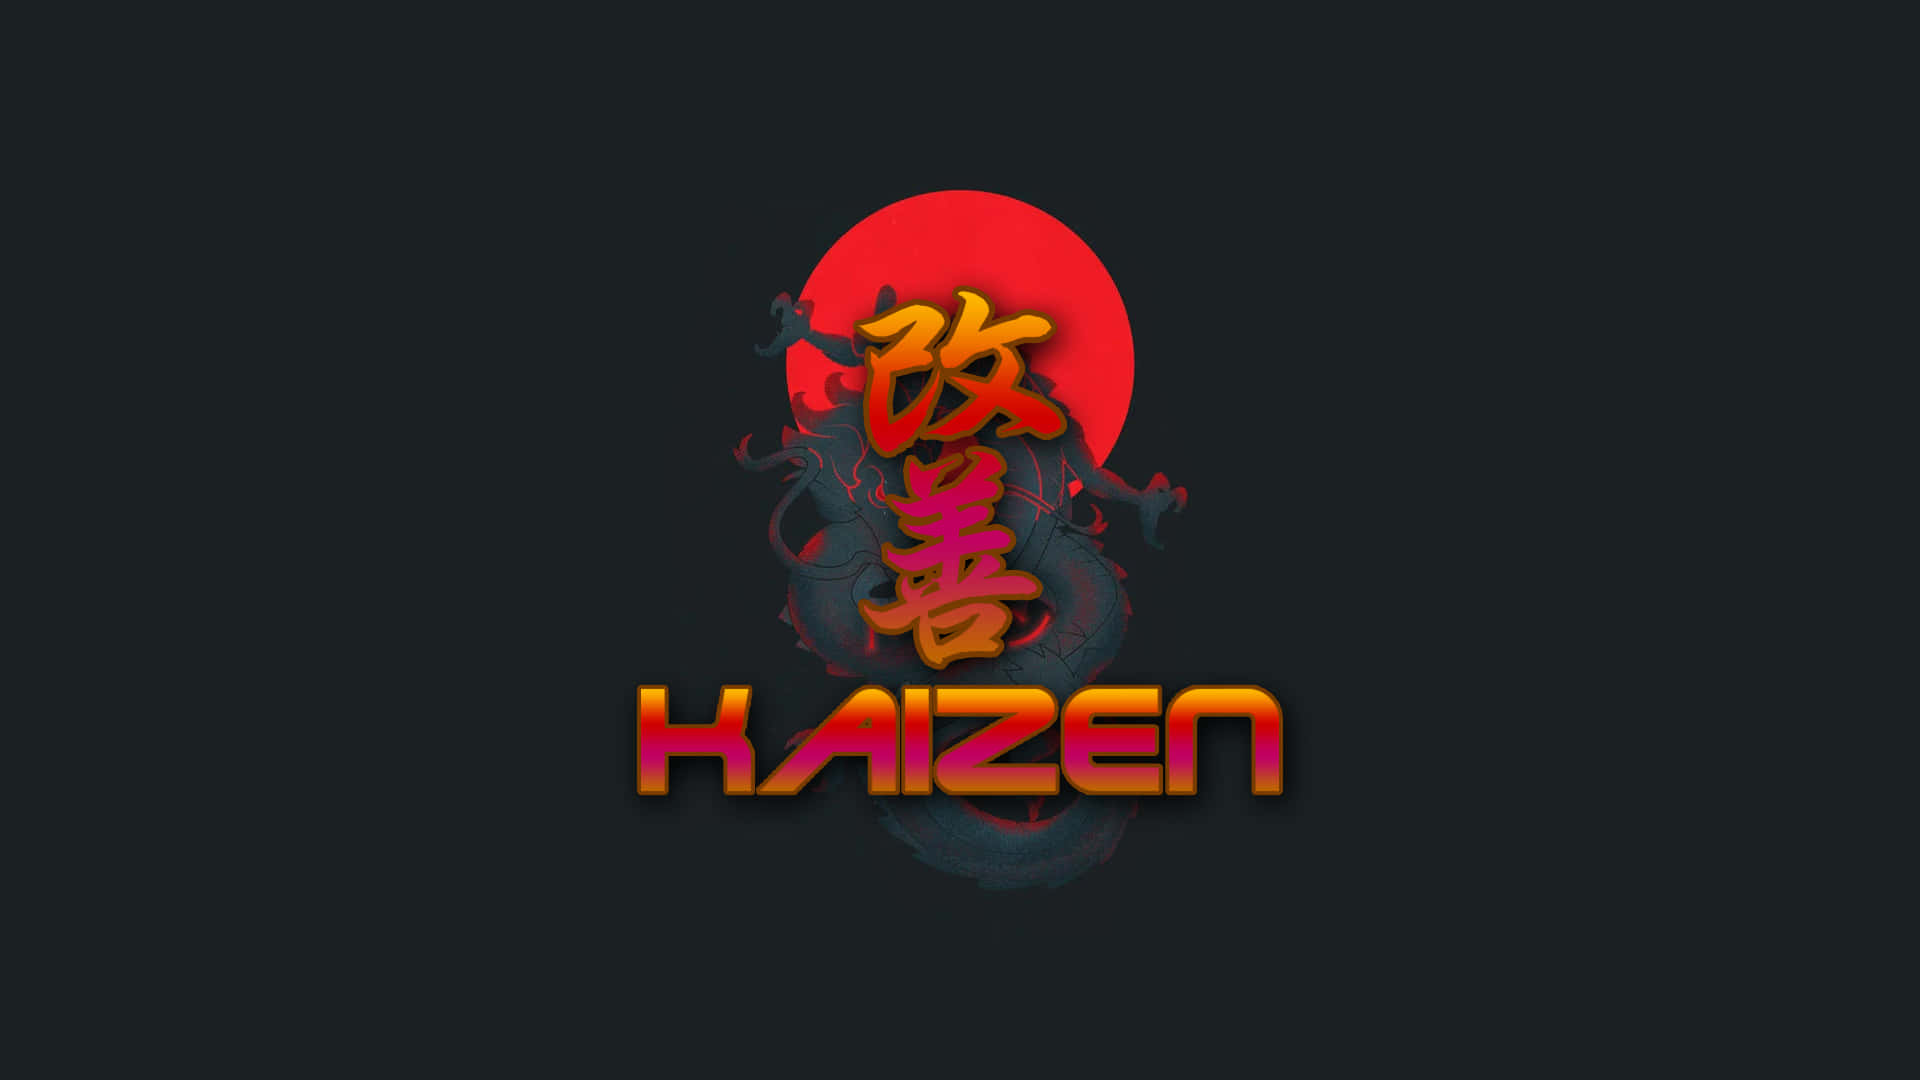 Kaizen Concept Red Sun Graphic Wallpaper